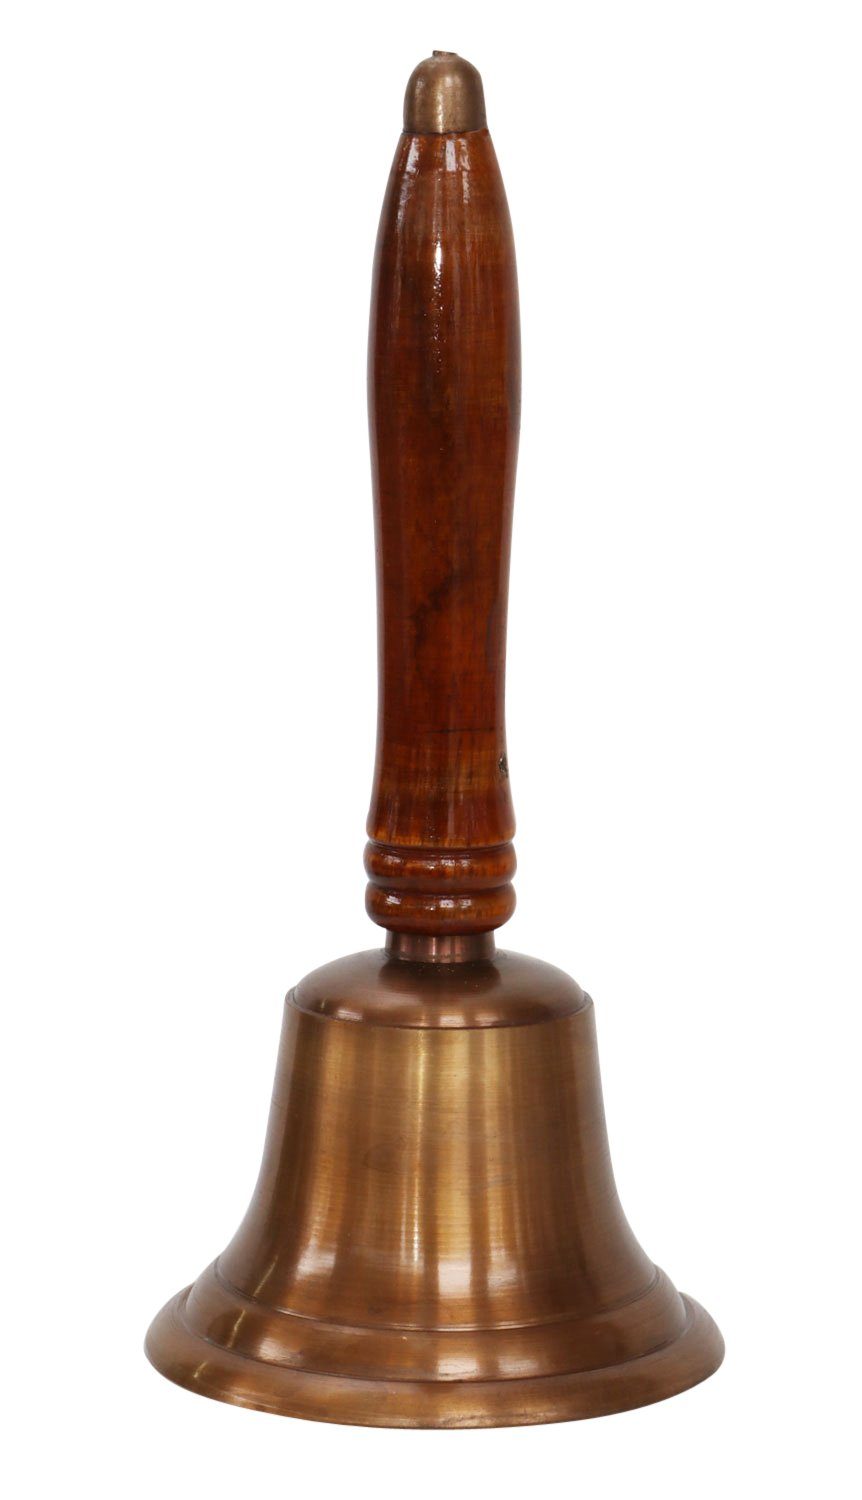 Aubaho Dekoobjekt Tischglocke 22cm Handglocke Glocke Schulglocke Antik-Stil Messing Holz